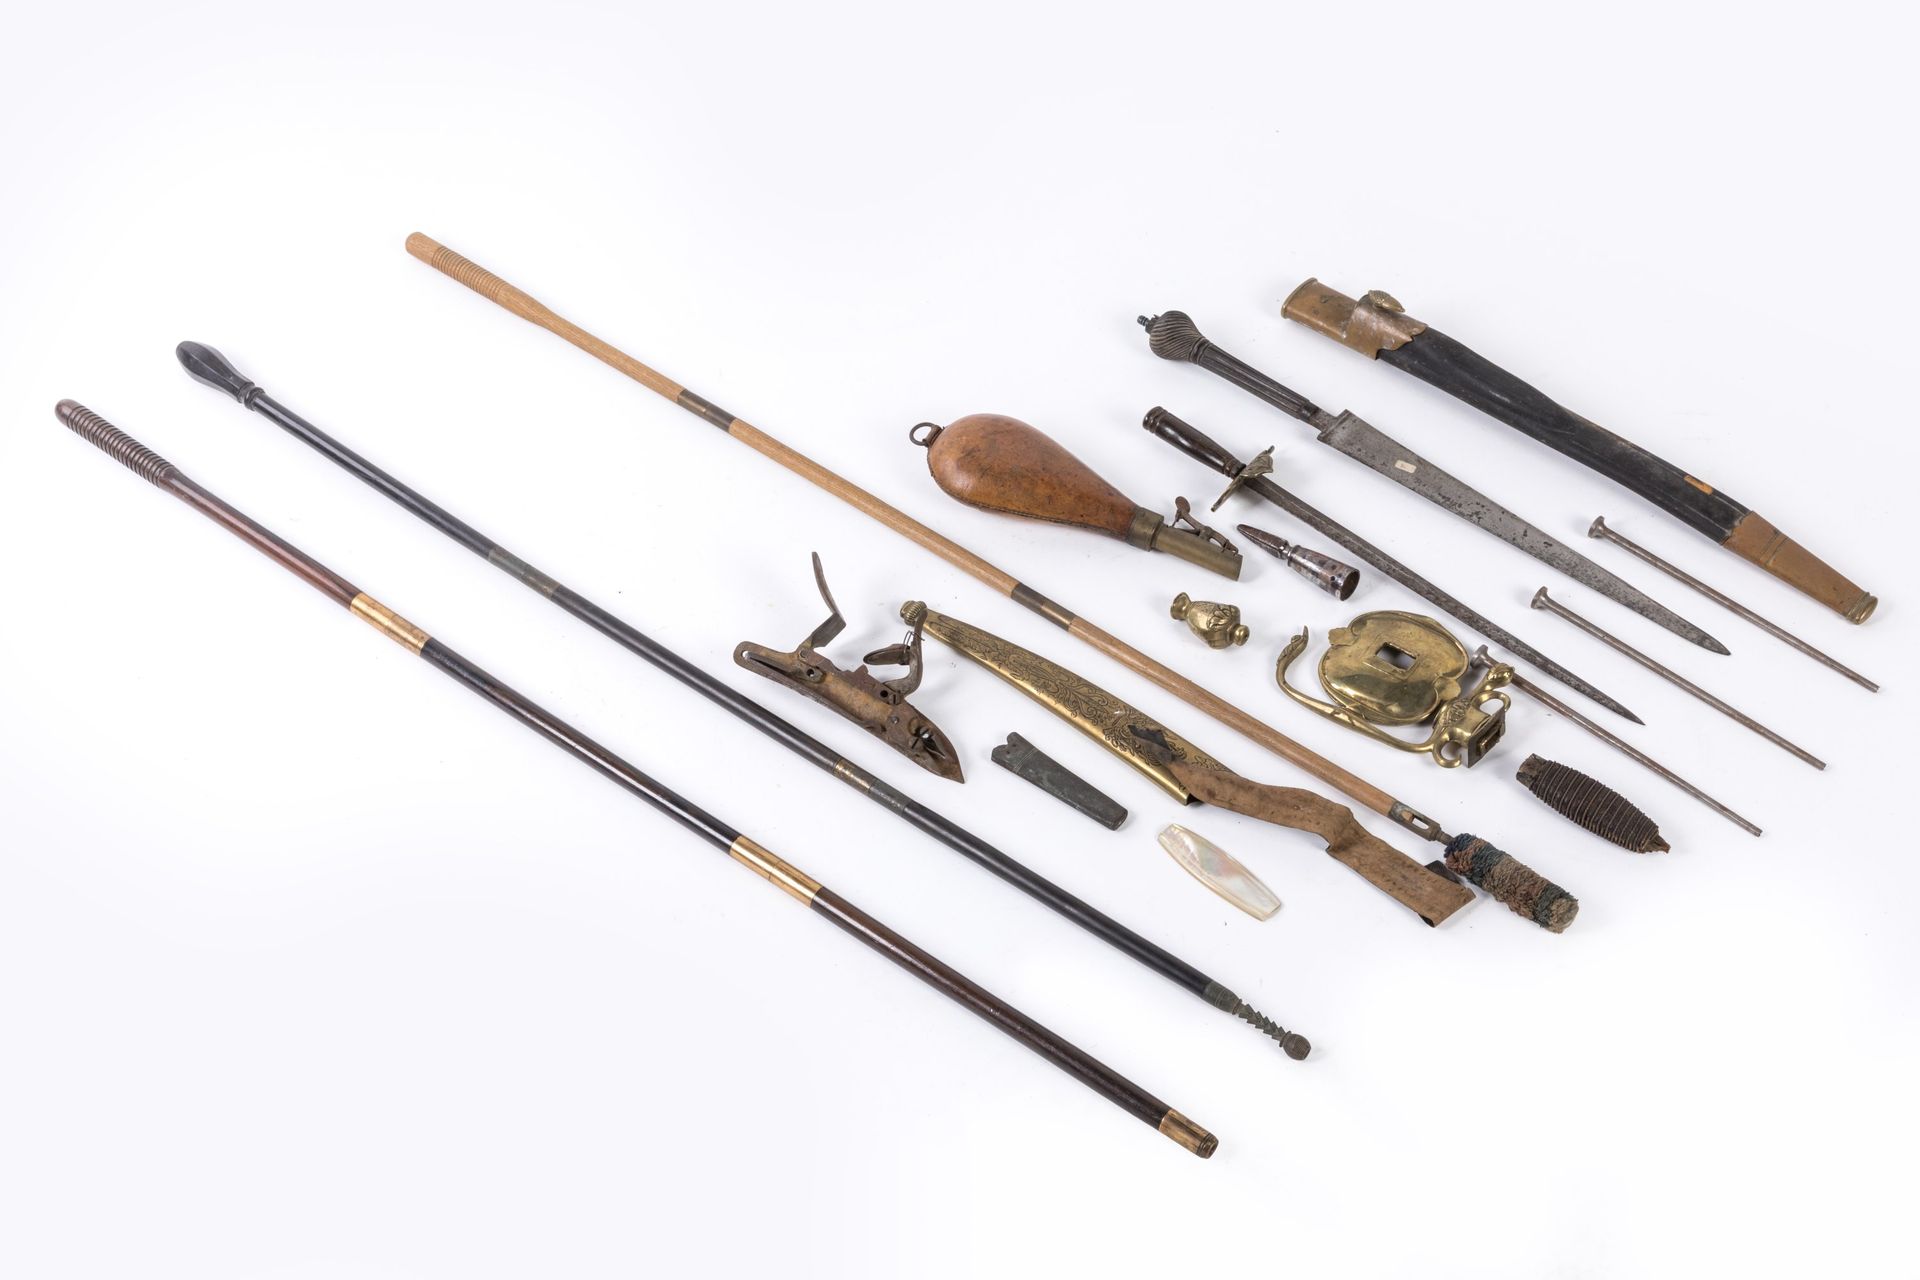 Null 备件包包括 ： 

锁、火药桶、清洁棒、剑引信、1821 型豪华军刀枪栓、刺刀等。